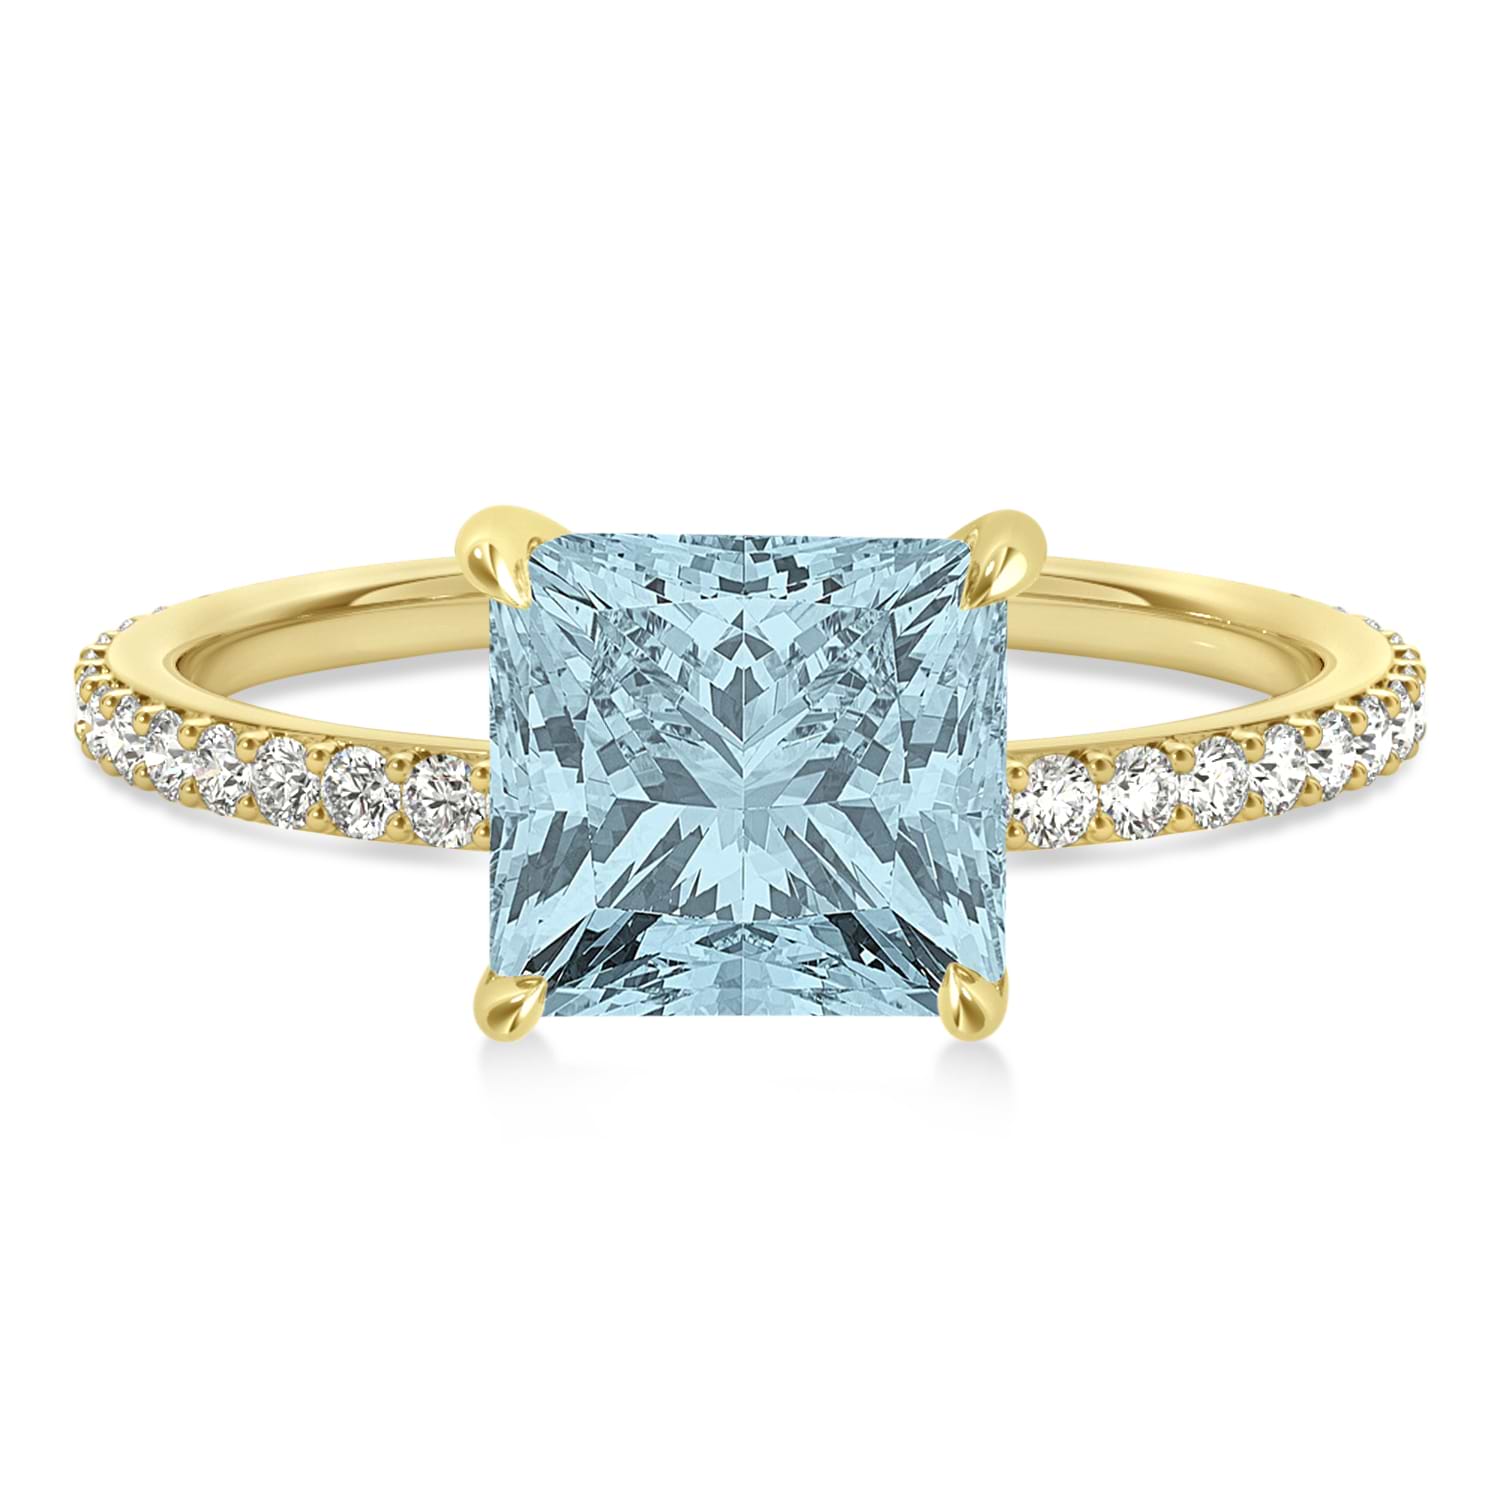 Princess Aquamarine & Diamond Hidden Halo Engagement Ring 14k Yellow Gold (0.89ct)